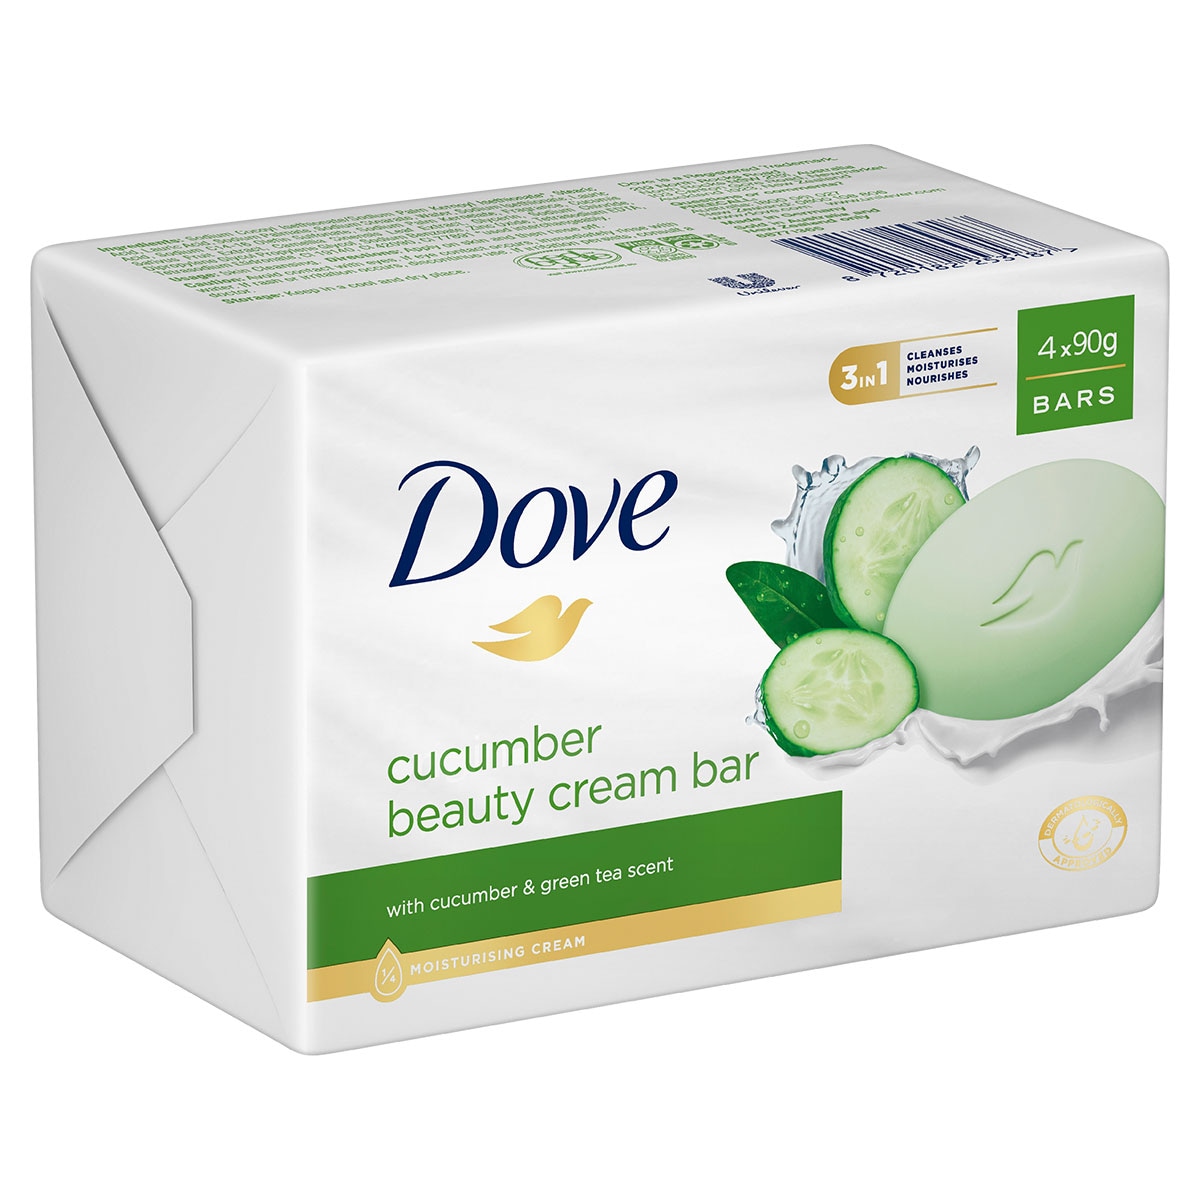 Dove Cucumber & Green Tea Beauty Cream Bar 90g x 4 Bars